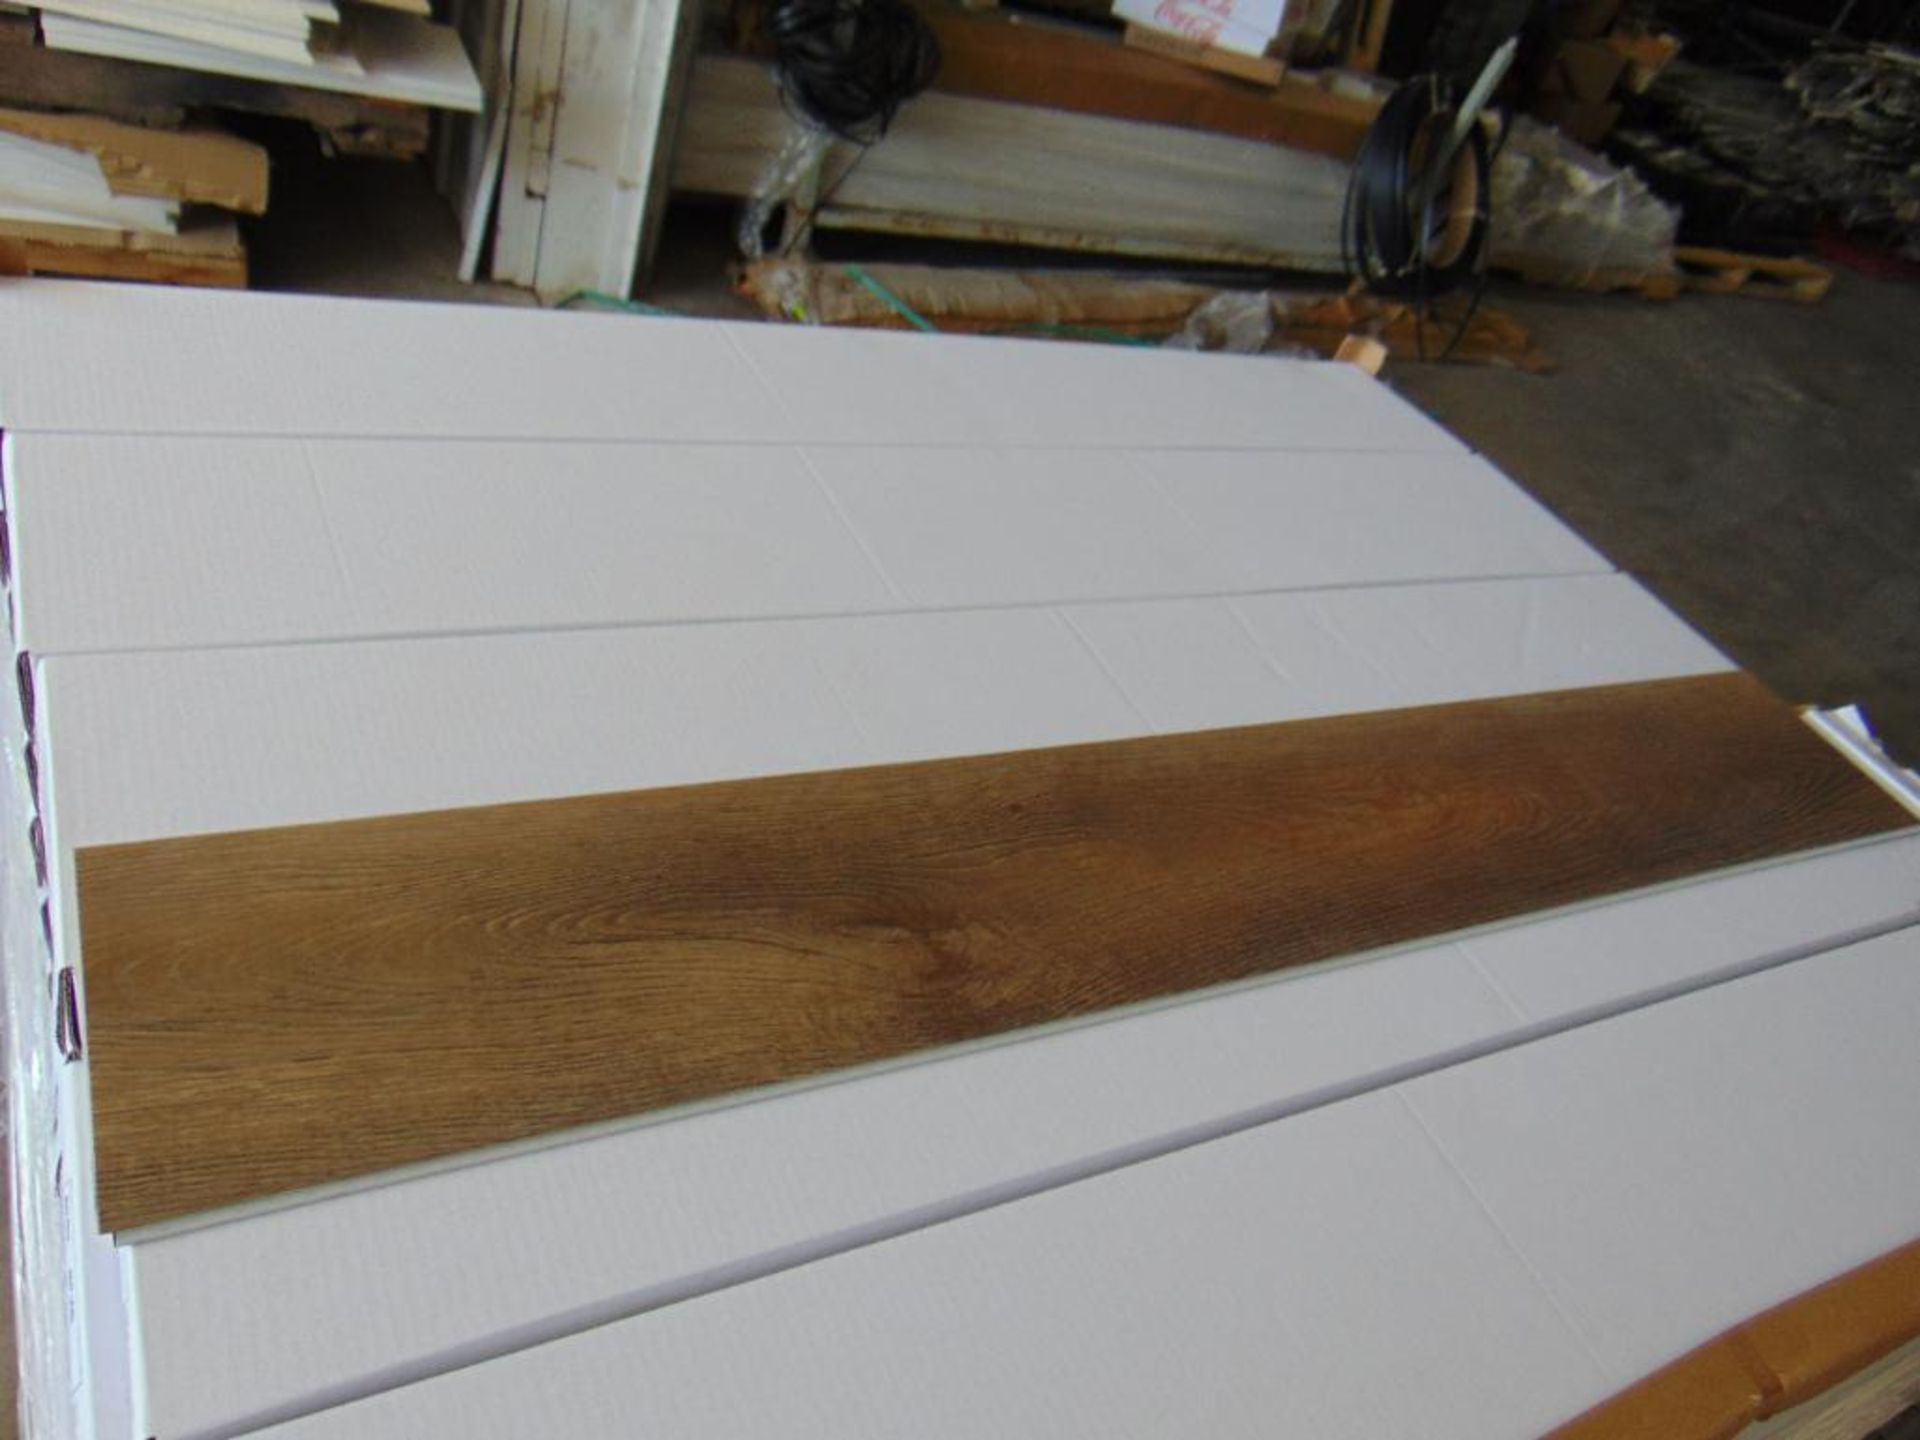 630.96 SF Waterproof Vinyl Plank - Next Level Toffee Snap Together Flooring - Image 2 of 6